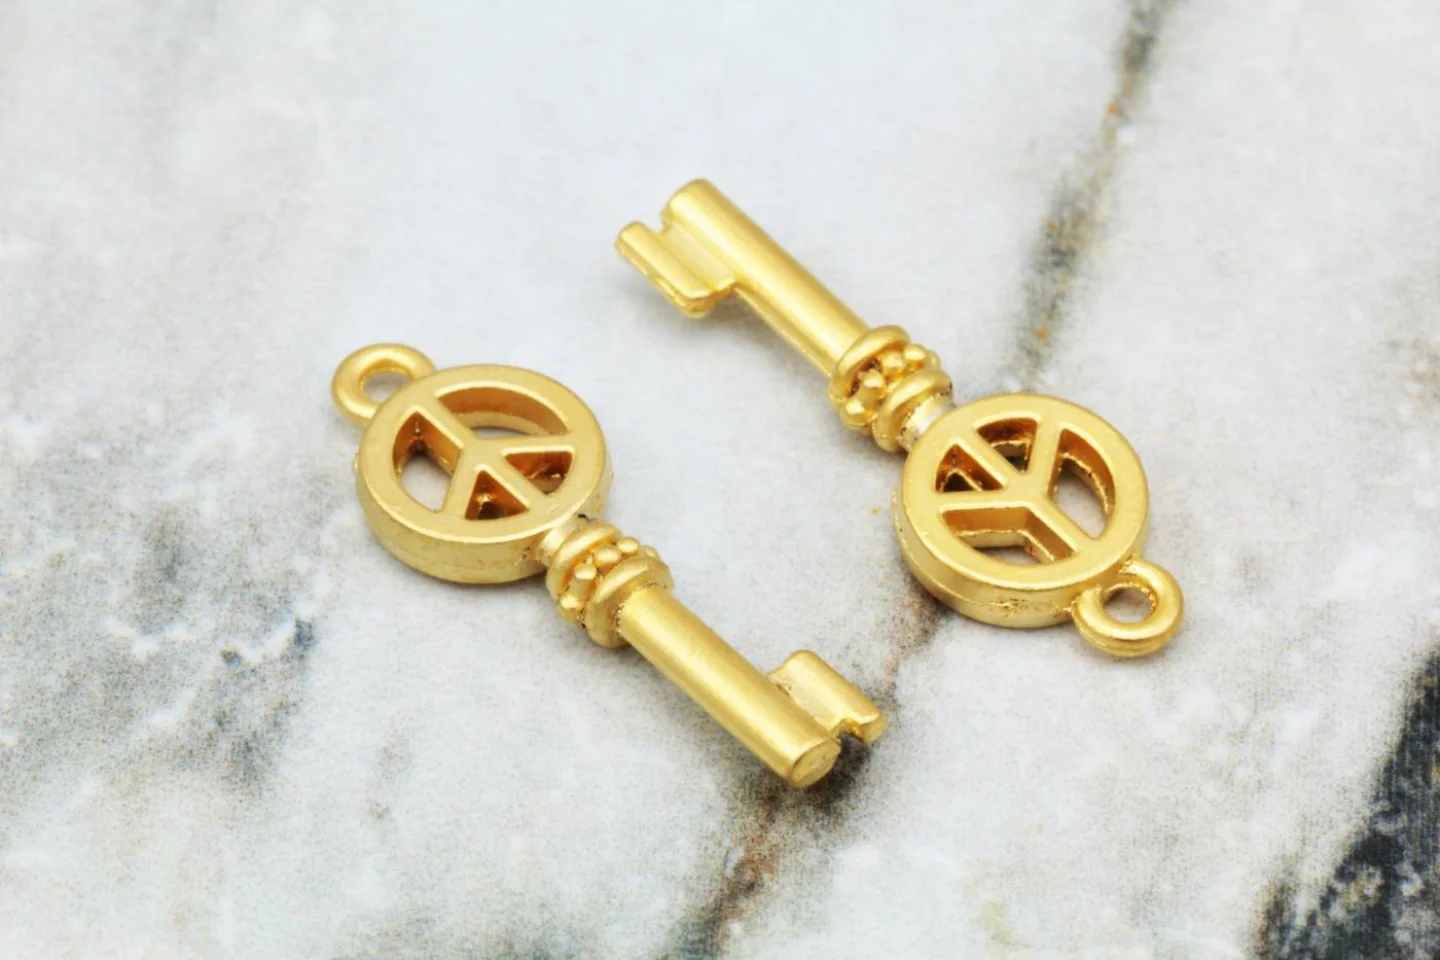 gold-metal-peace-sign-key-pendant.